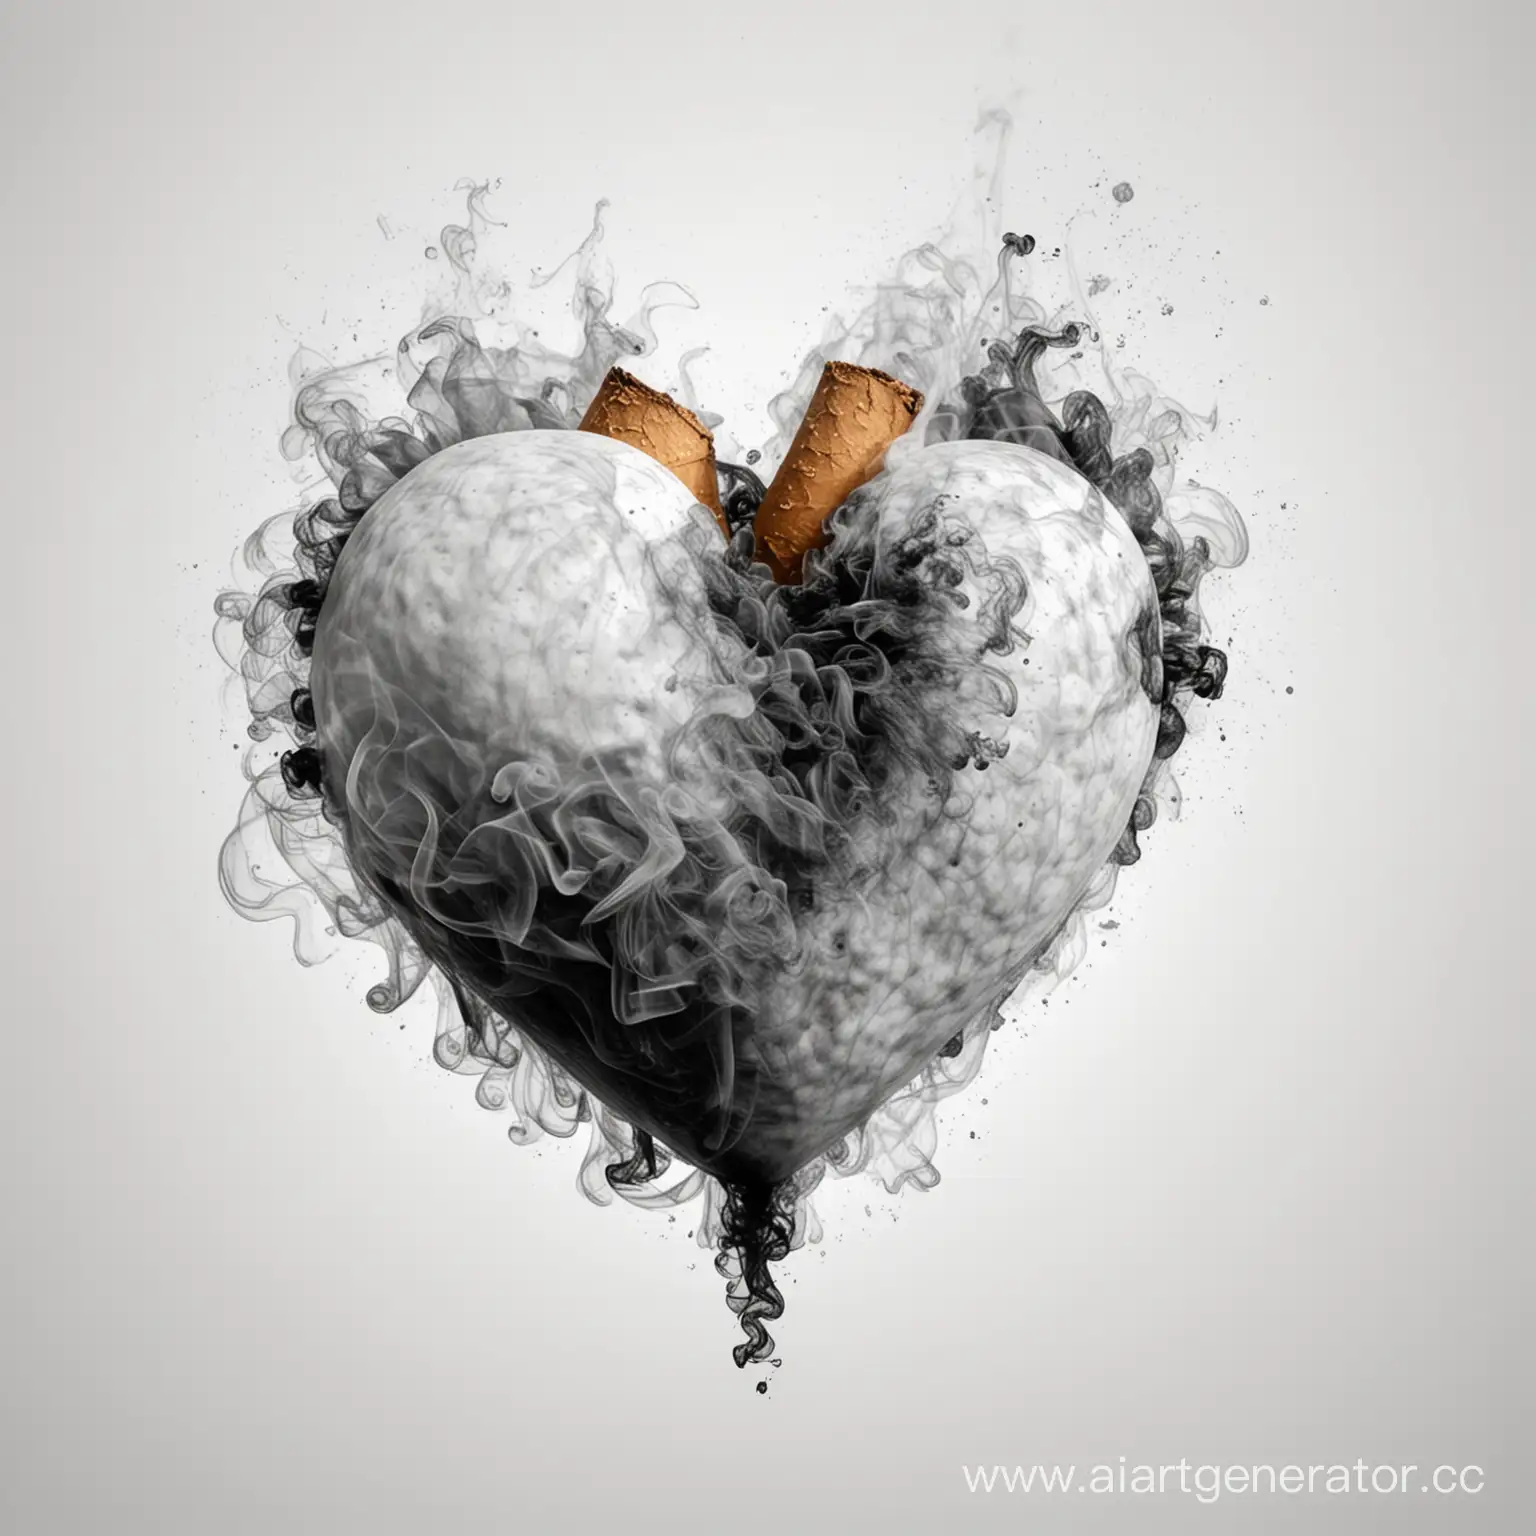 Monochrome-Heart-Enveloped-in-Cigarette-Smoke